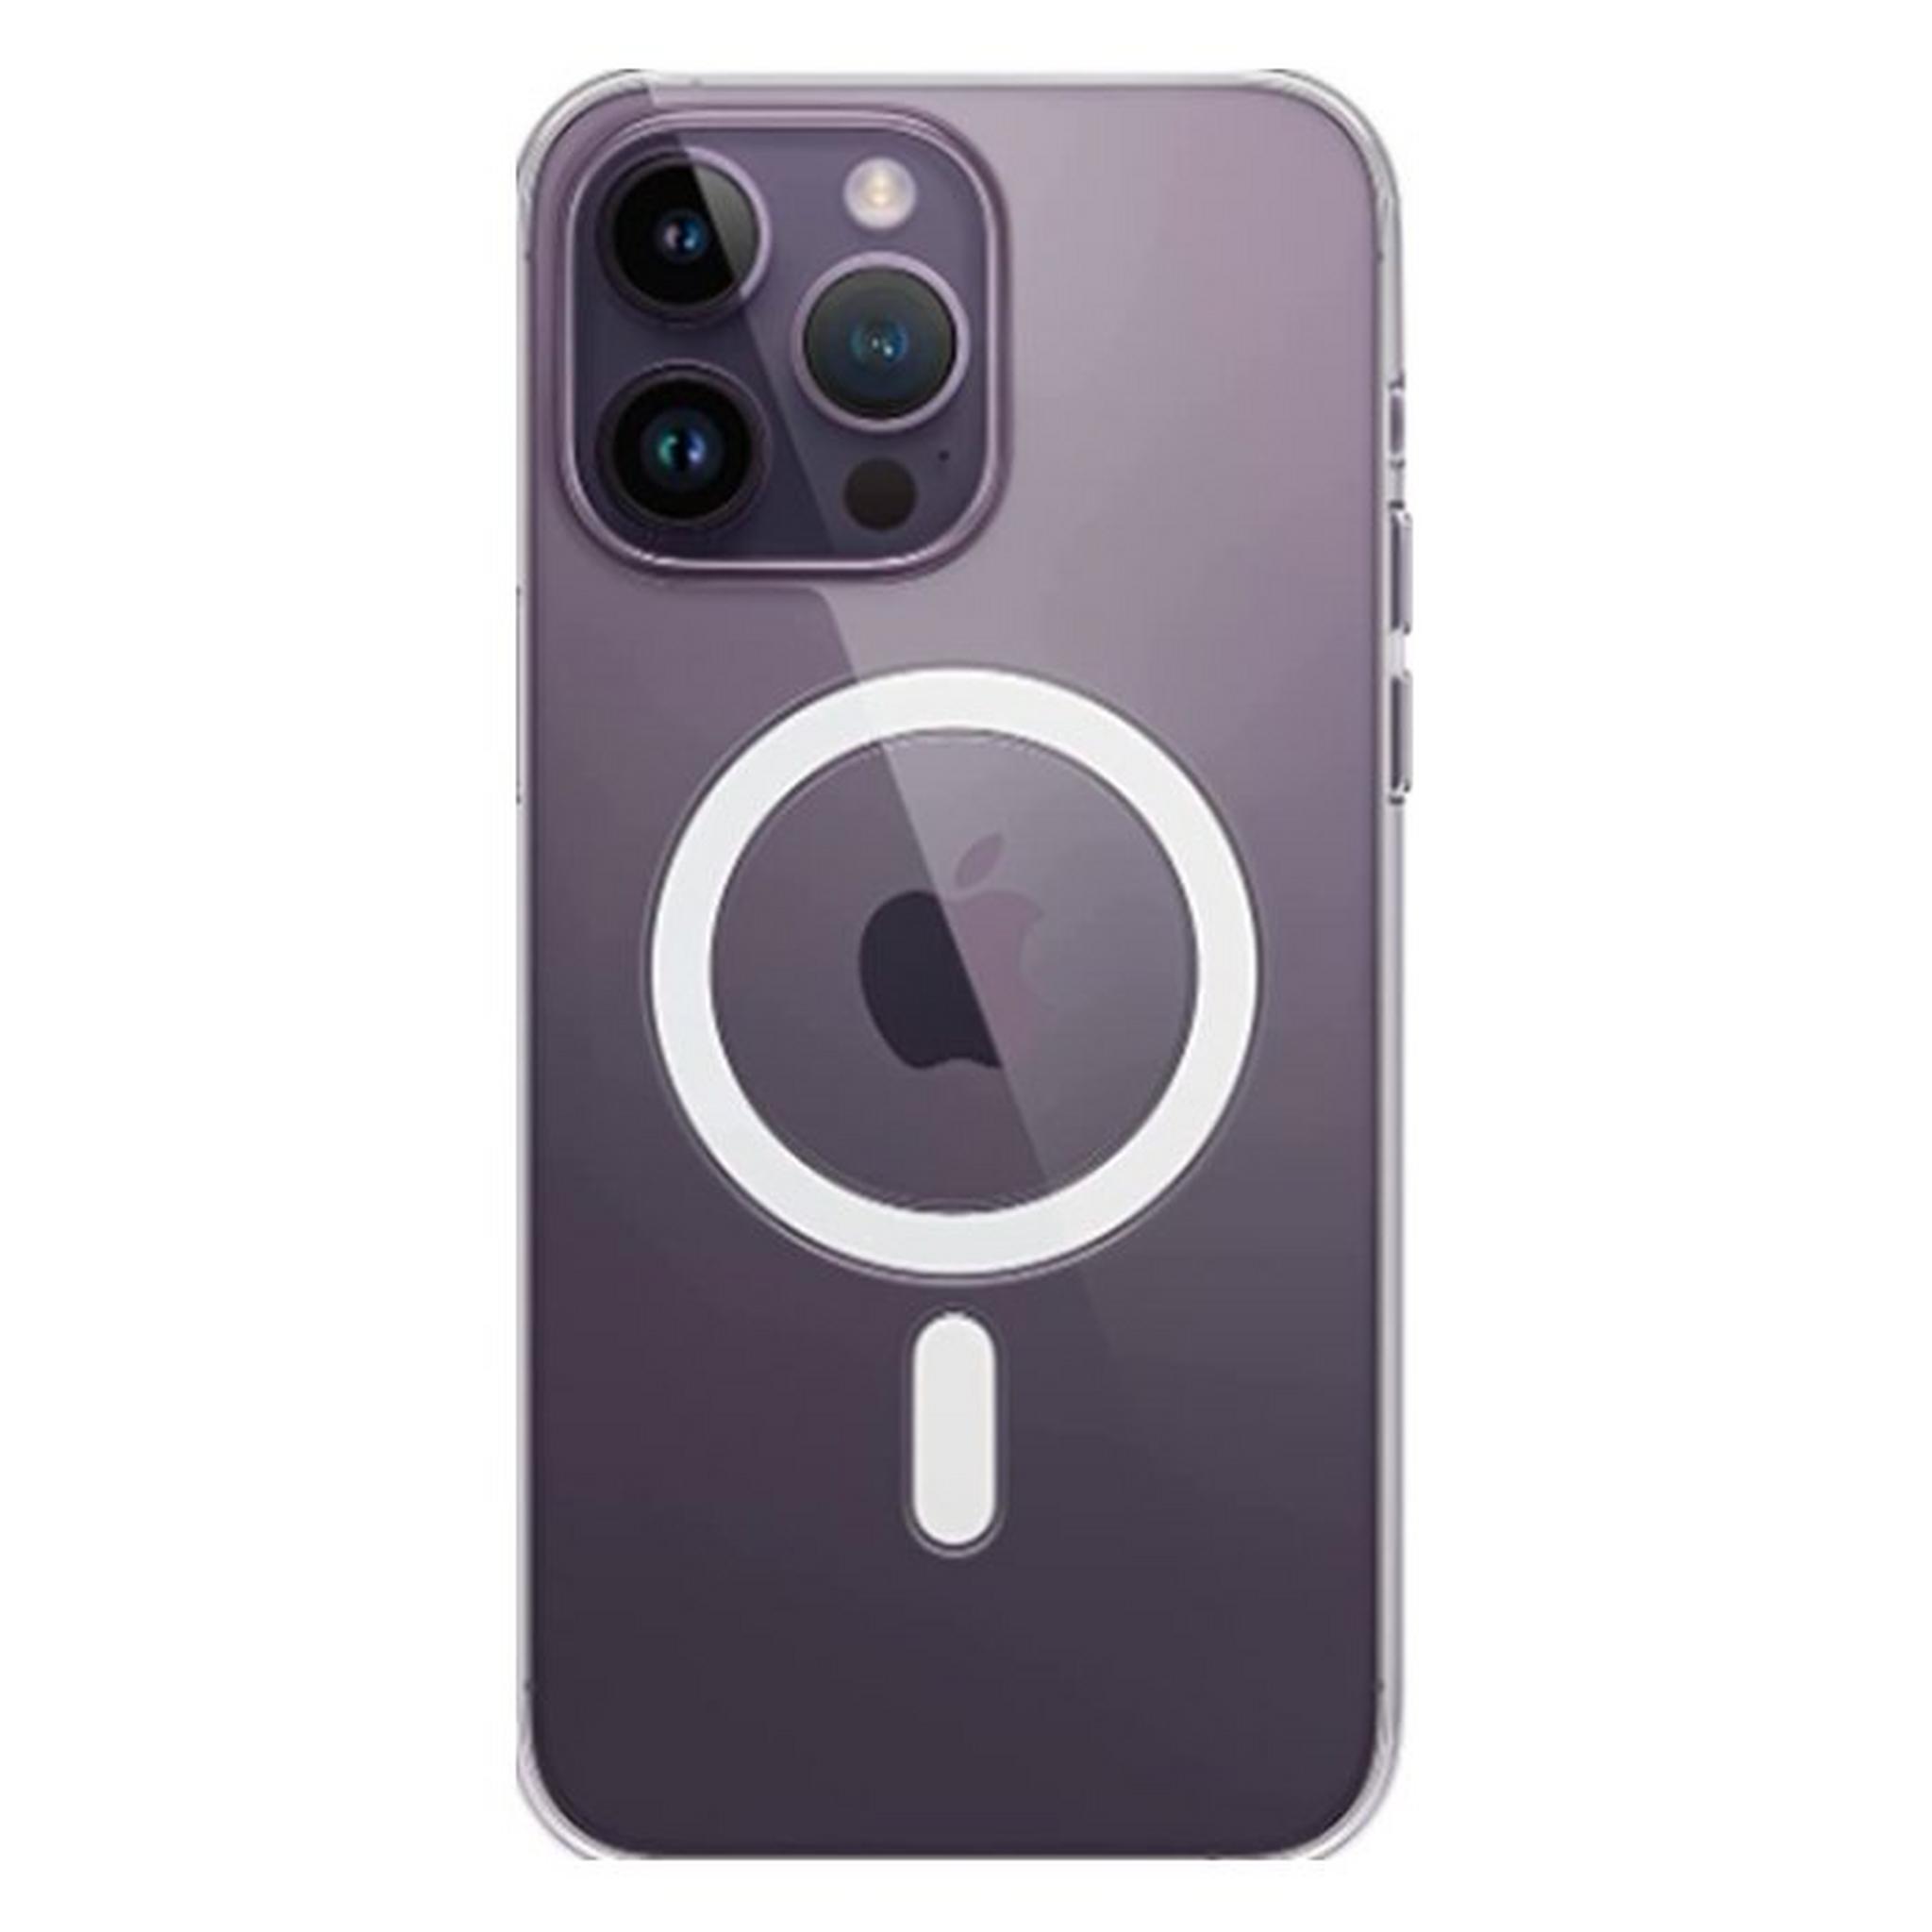 Apple iPhone 14 Pro Max 5G 256GB - Deep Purple + EQ Screen Protector & Applicator - Clear + EQ Air Shock Case+ Belkin 20W USB-C Wall Charger - White